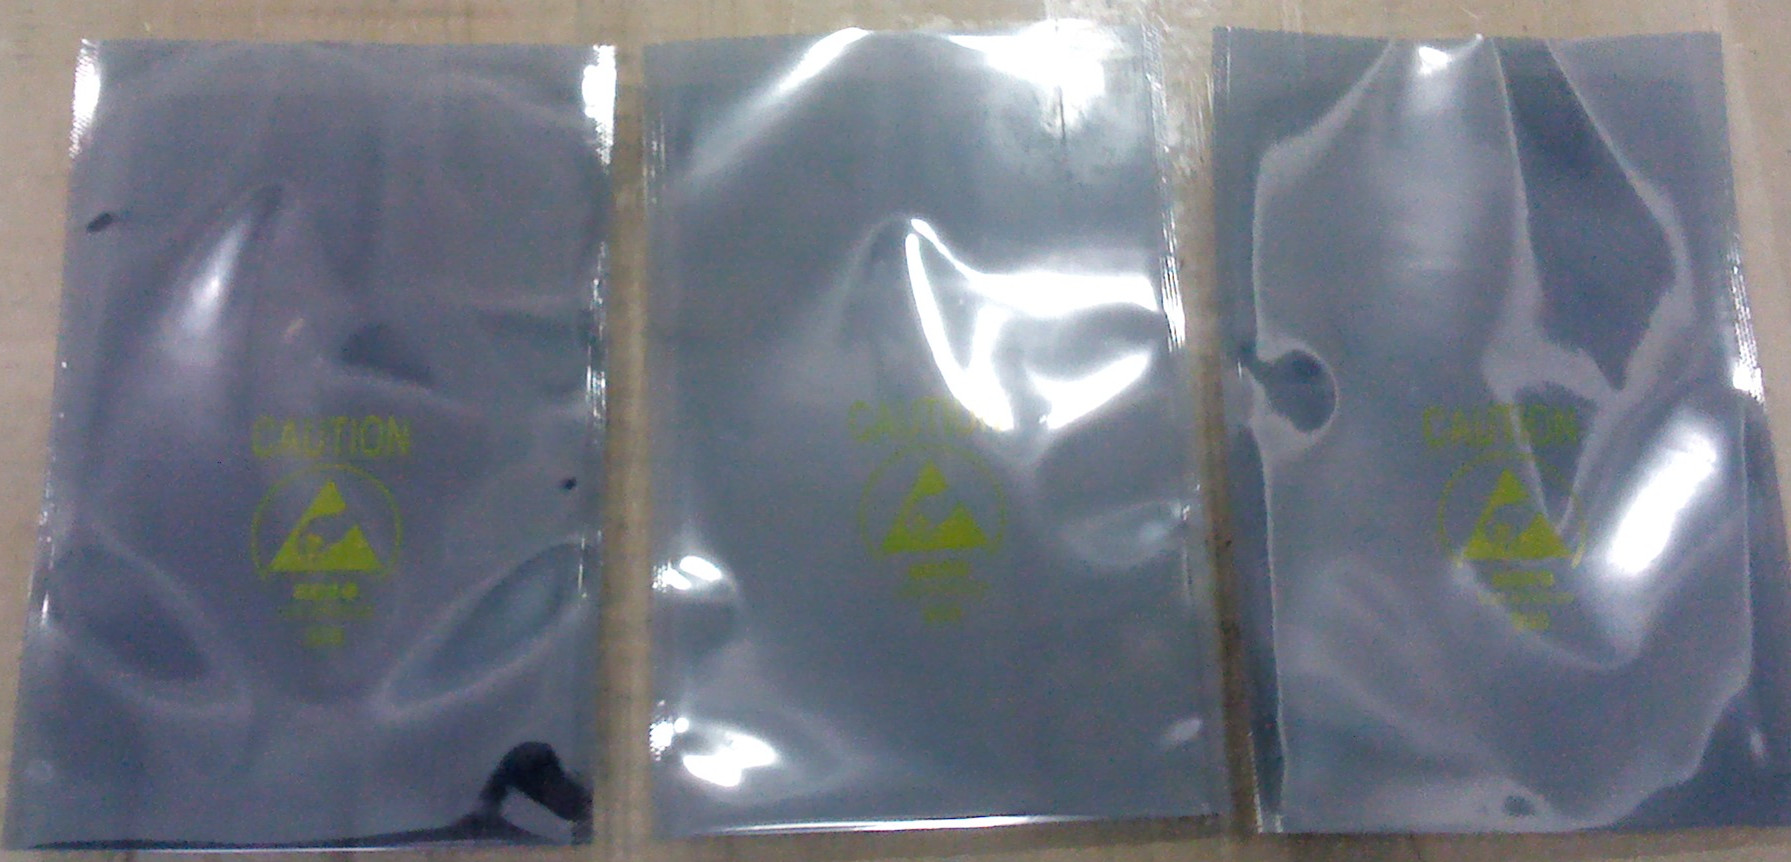 Antistatic Shielding Bags metal in 4x4inch